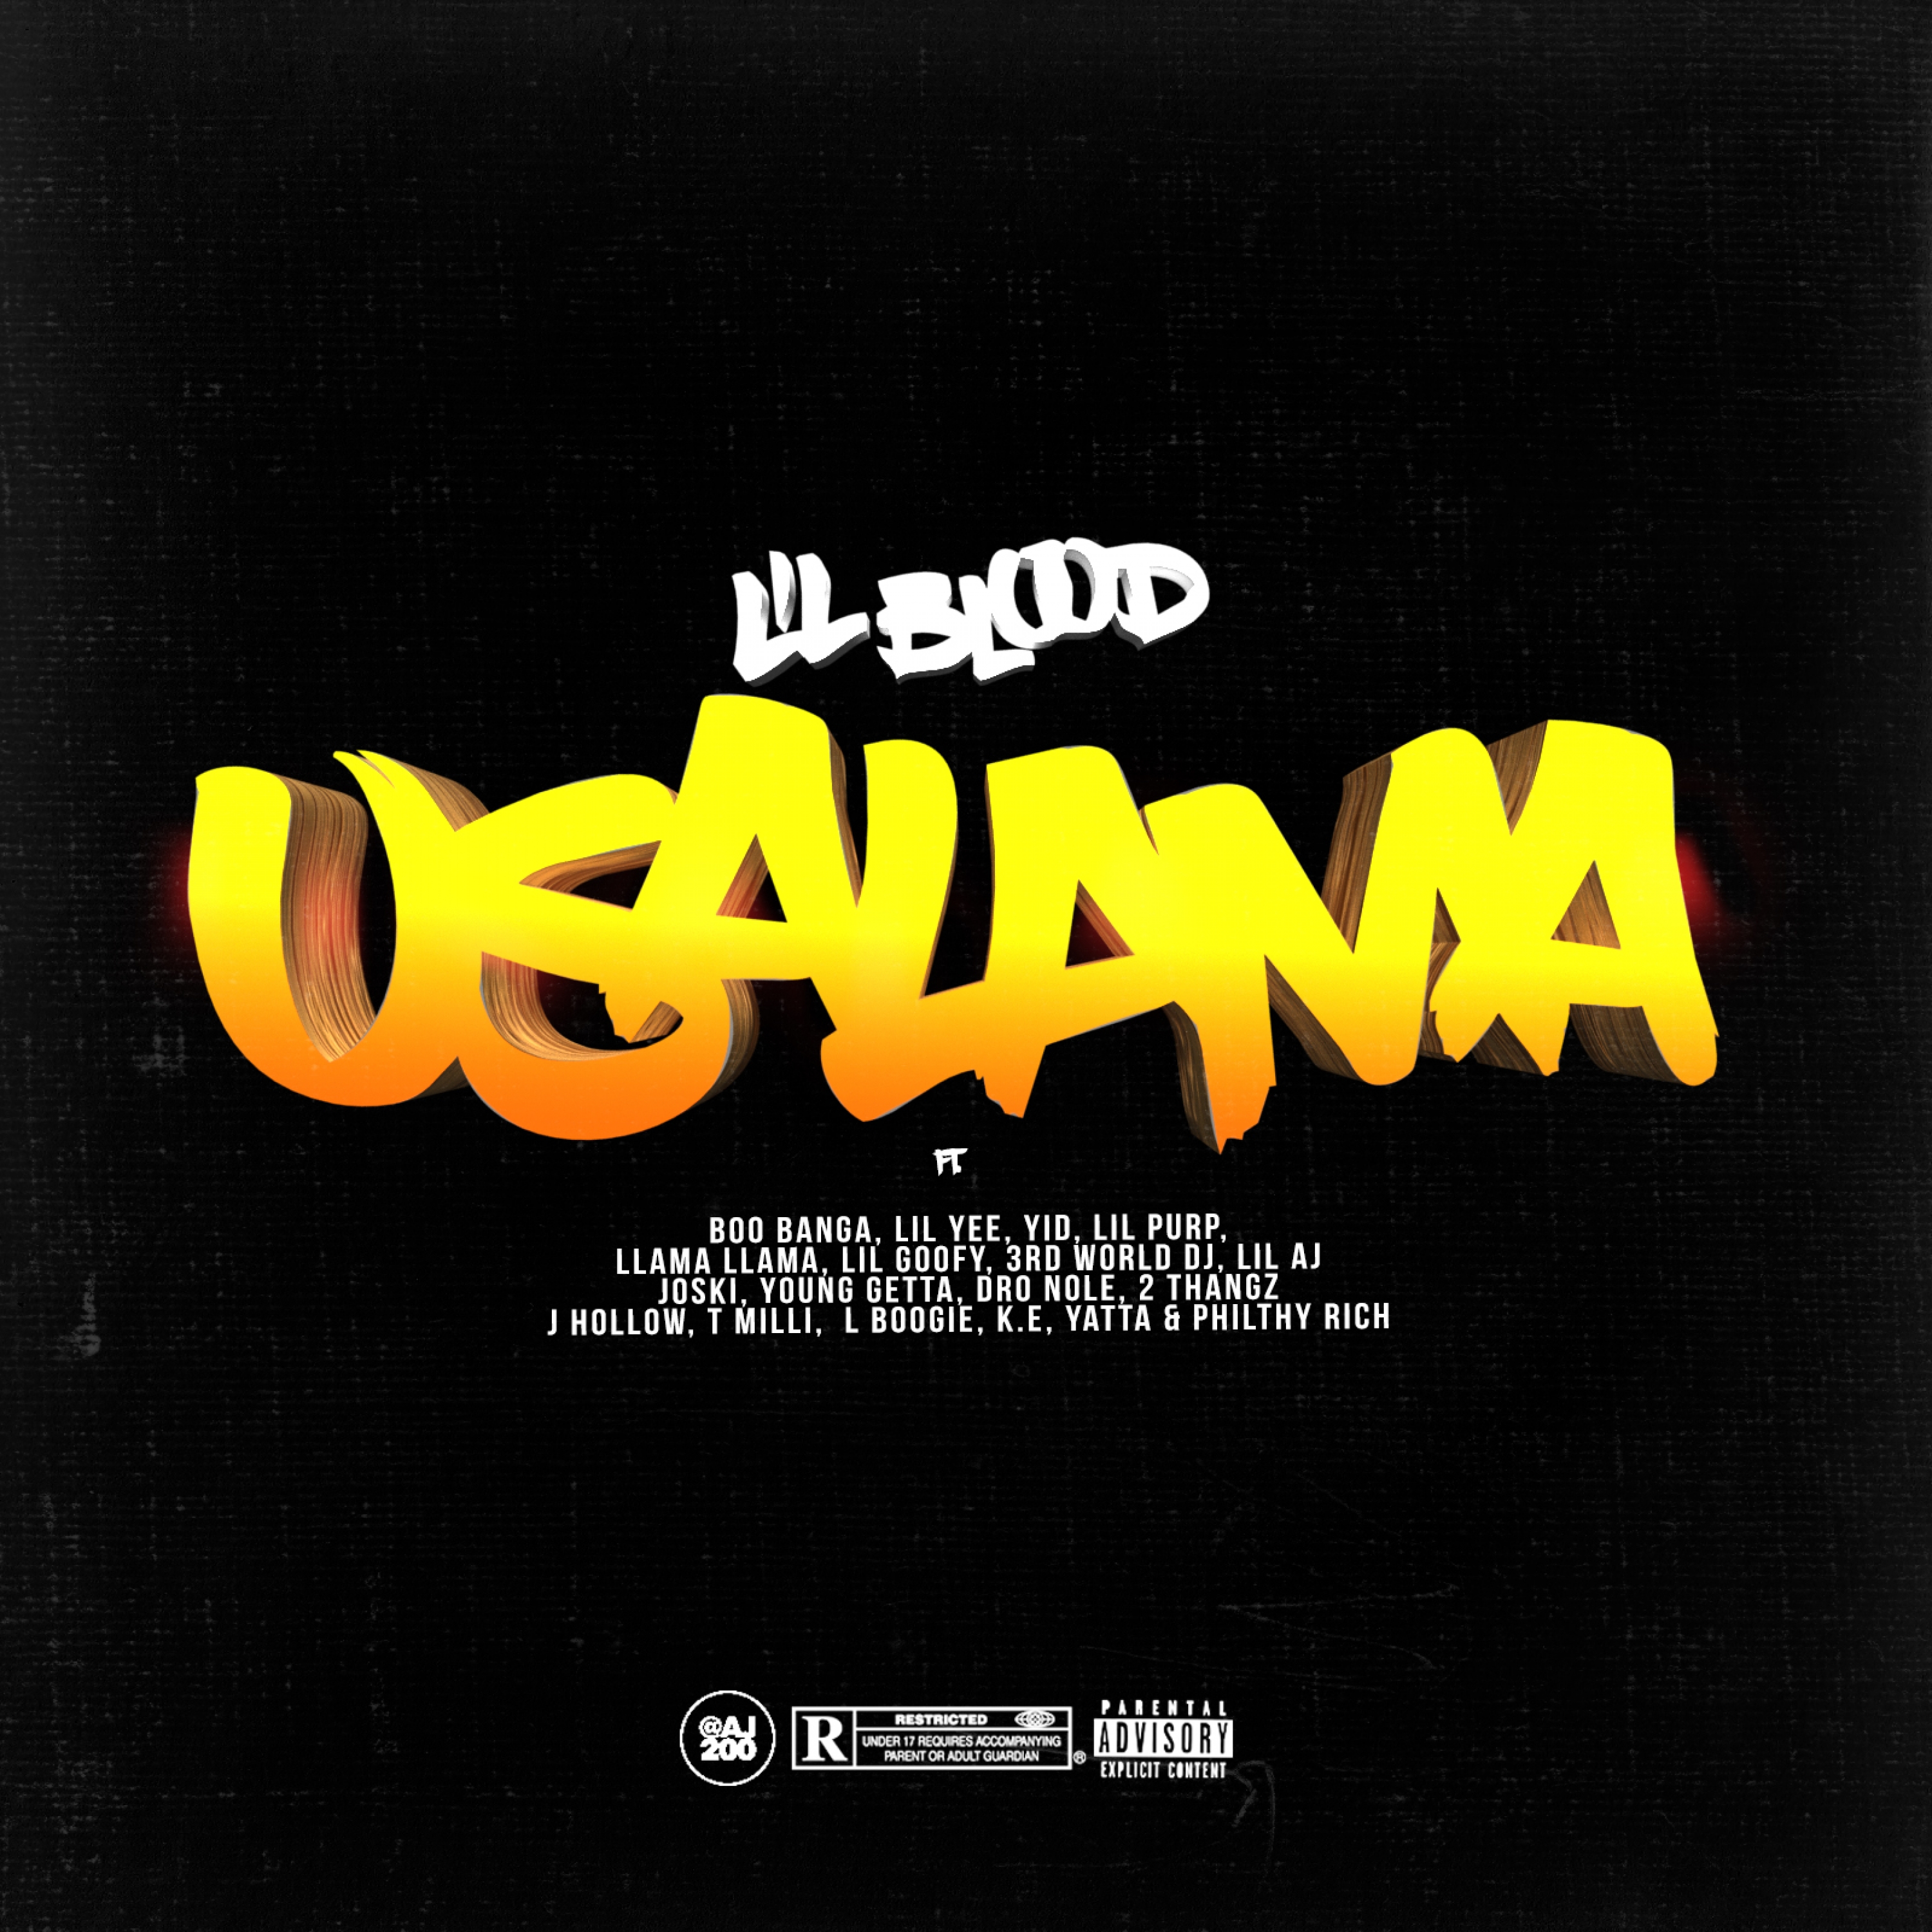 Usalama (ft. Boo Banga, Lil Yee, Yid, Lil Purp, Llama Llama, Lil Goofy, 3rd World DJ, Lil AJ, Joski, Young Getta, Dro Nole, 2 Thangz, J Hollow, T Milli, L Boogie, K.E., Yatta & Philthy Rich)